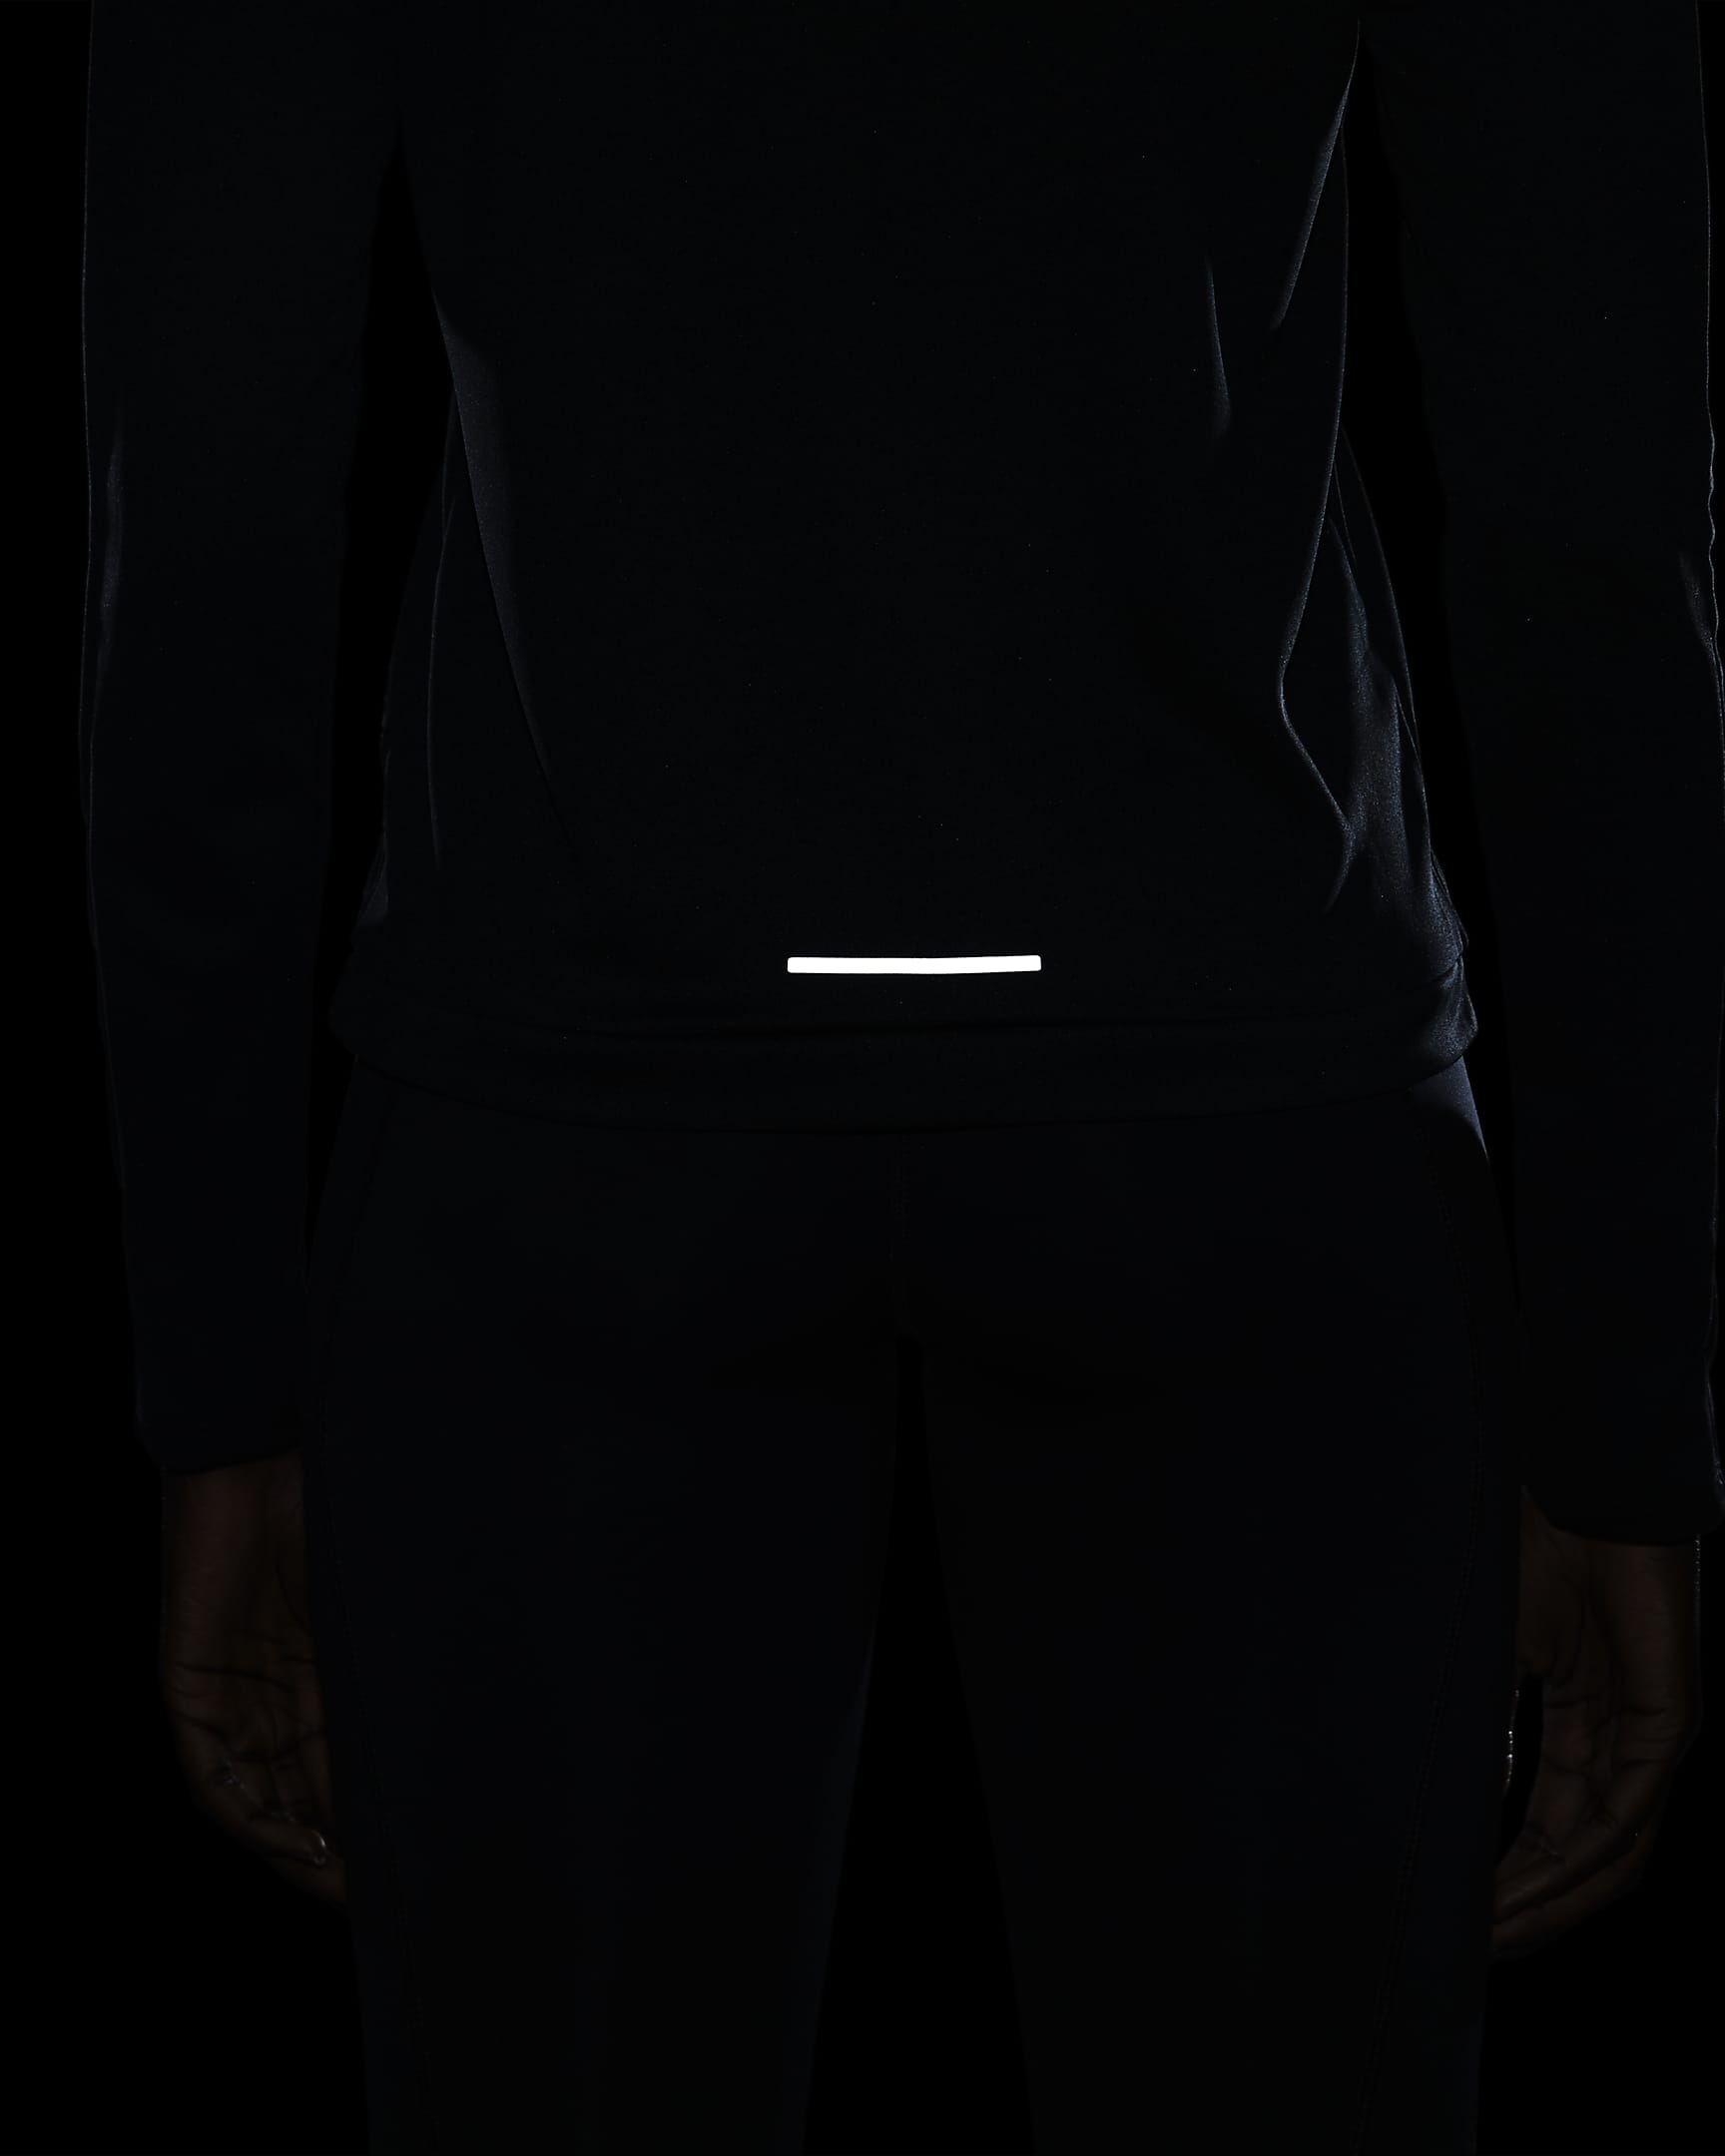 Nike Dri-FIT Pacer Women's 1/4-Zip Sweatshirt. Nike UK